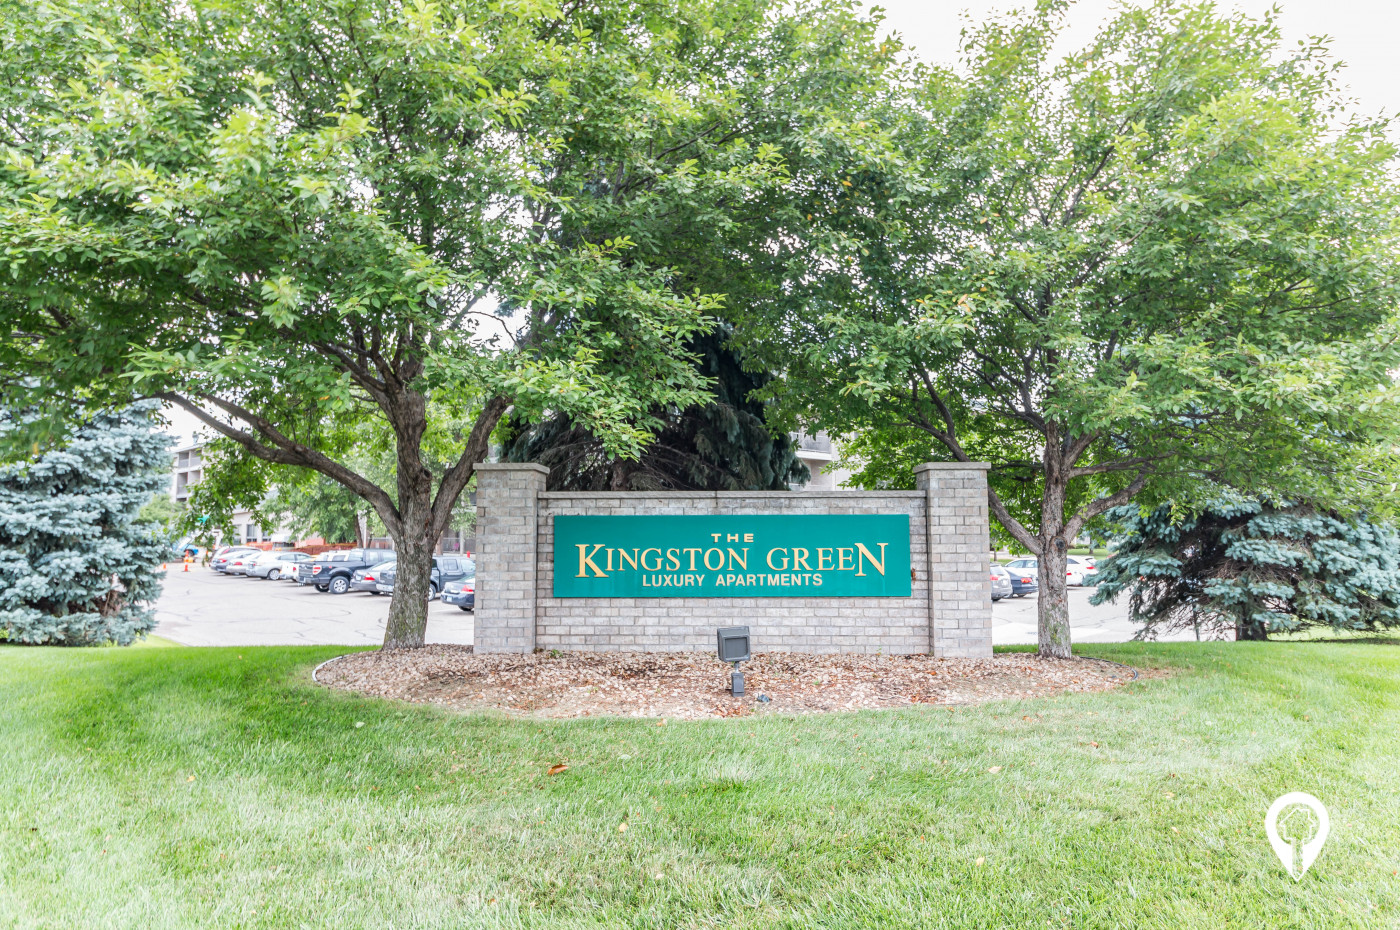 The Kingston Green Apartments